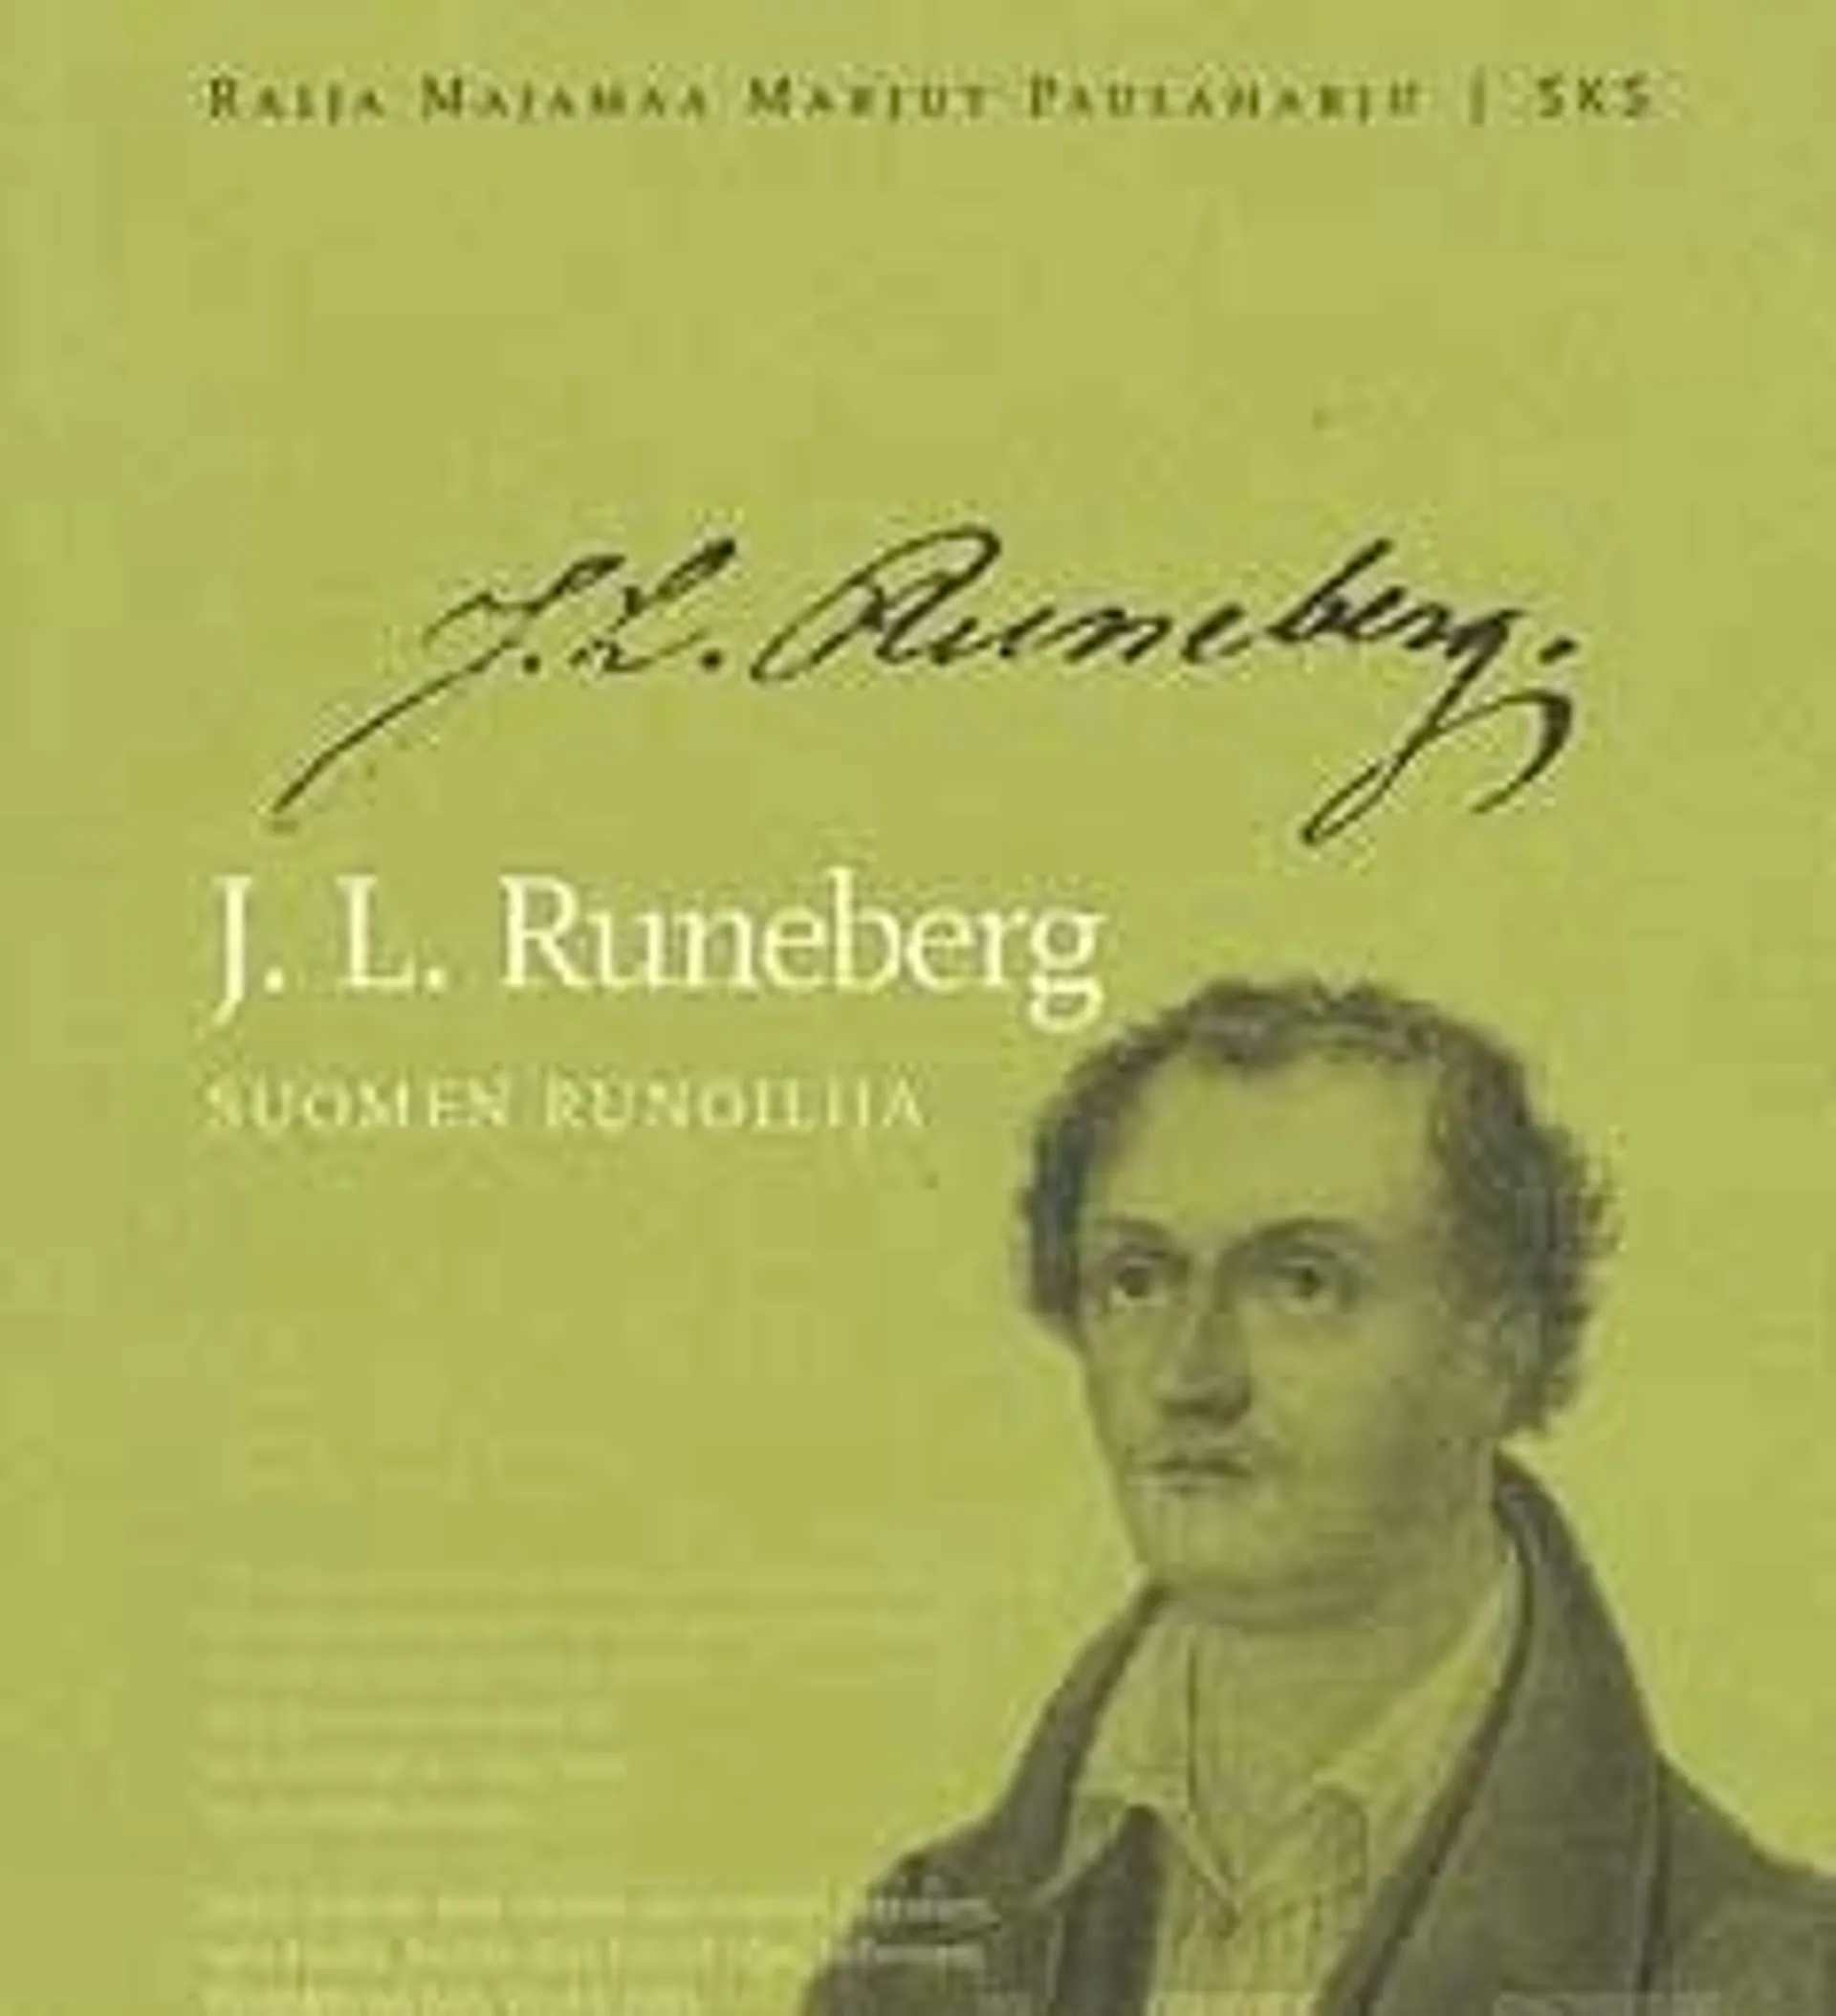 Majamaa, J.L. Runeberg